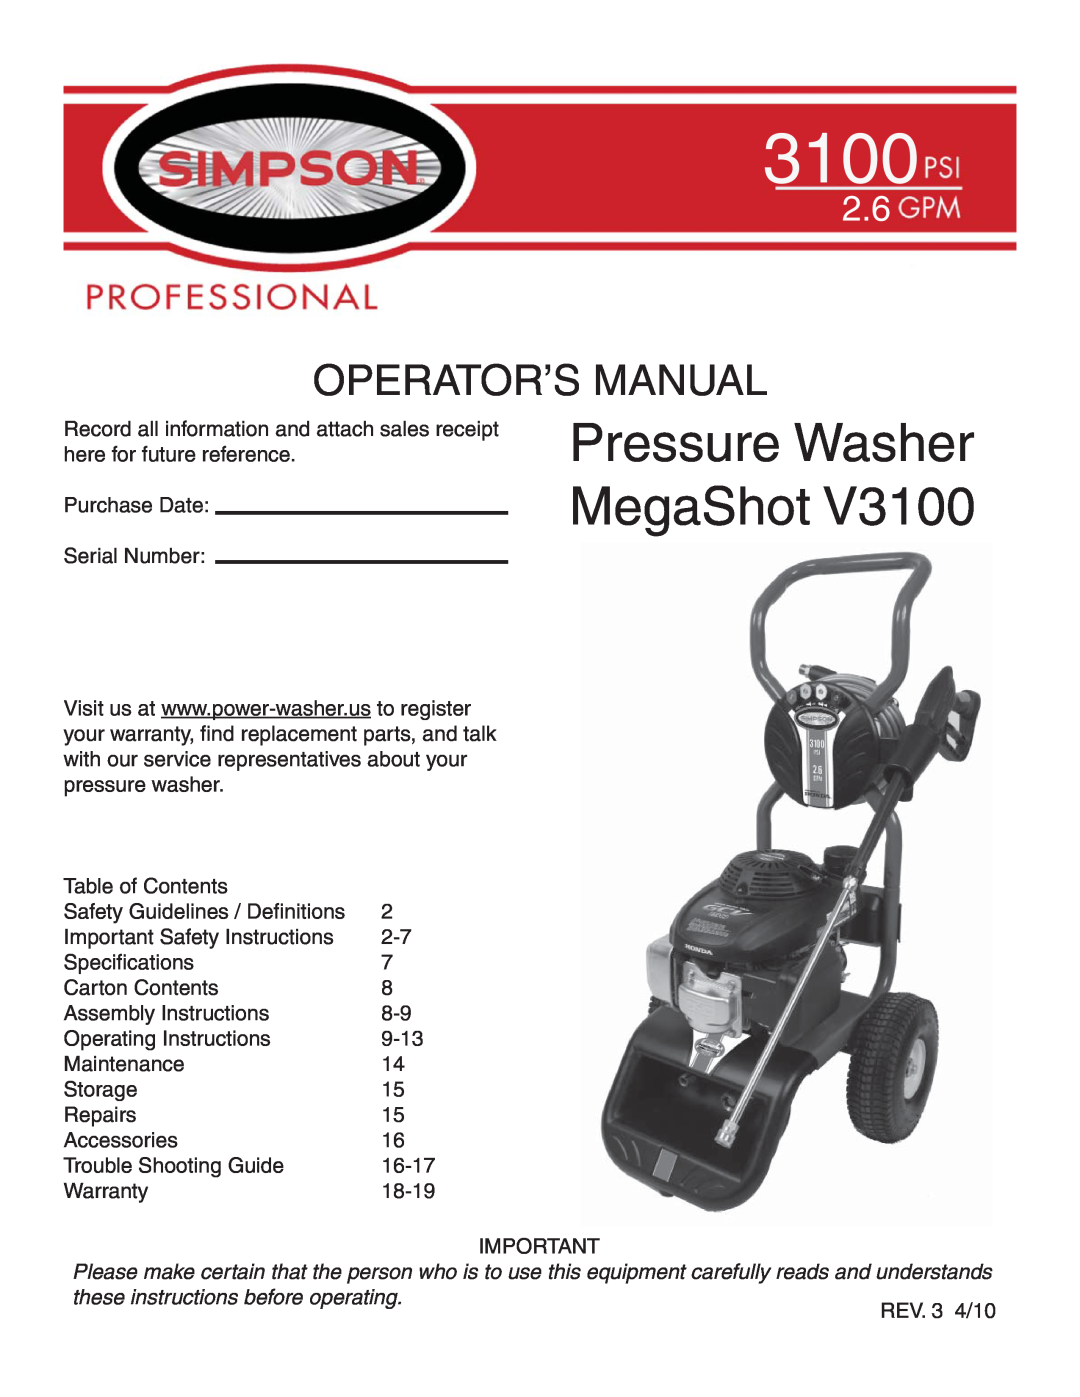 Simpson V3100 warranty Pressure Washer MegaShot, Operator’S Manual 